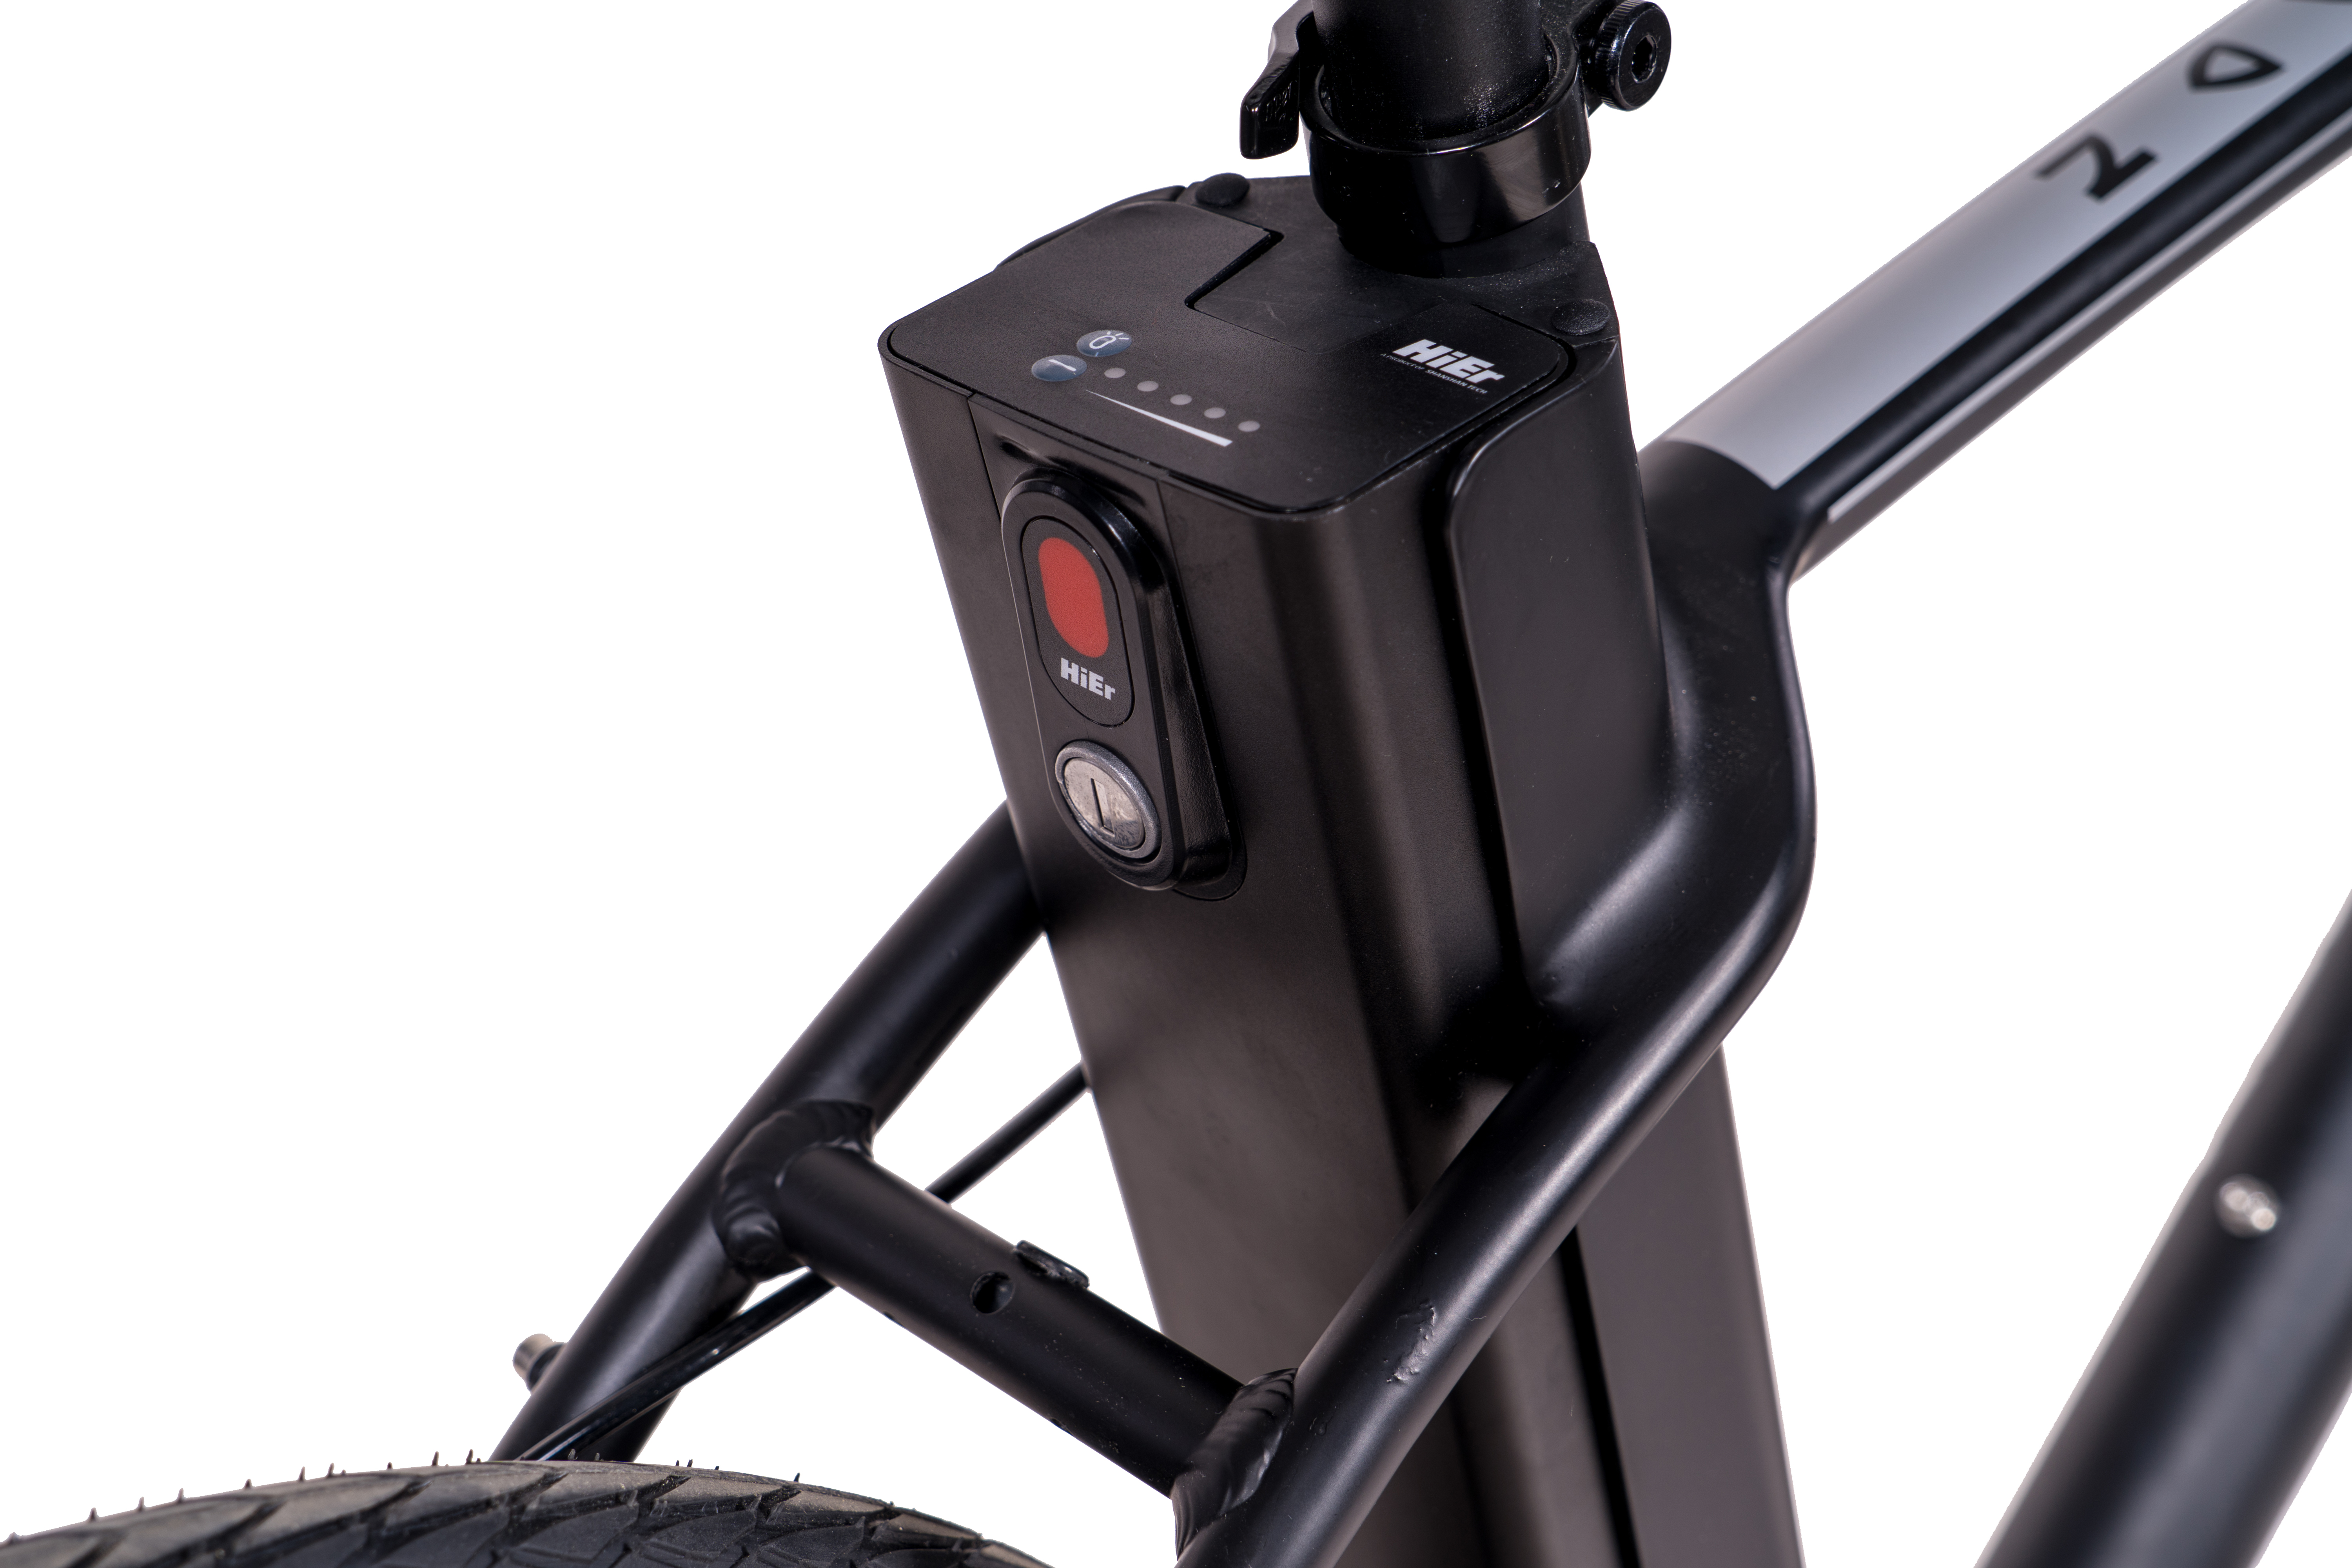 367 Zoll, 28 Urbanbike Unisex-Rad, schwarz) cm, Kettenantrieb Rahmenhöhe: eOctant 52 Wh, CHRISSON (Laufradgröße: